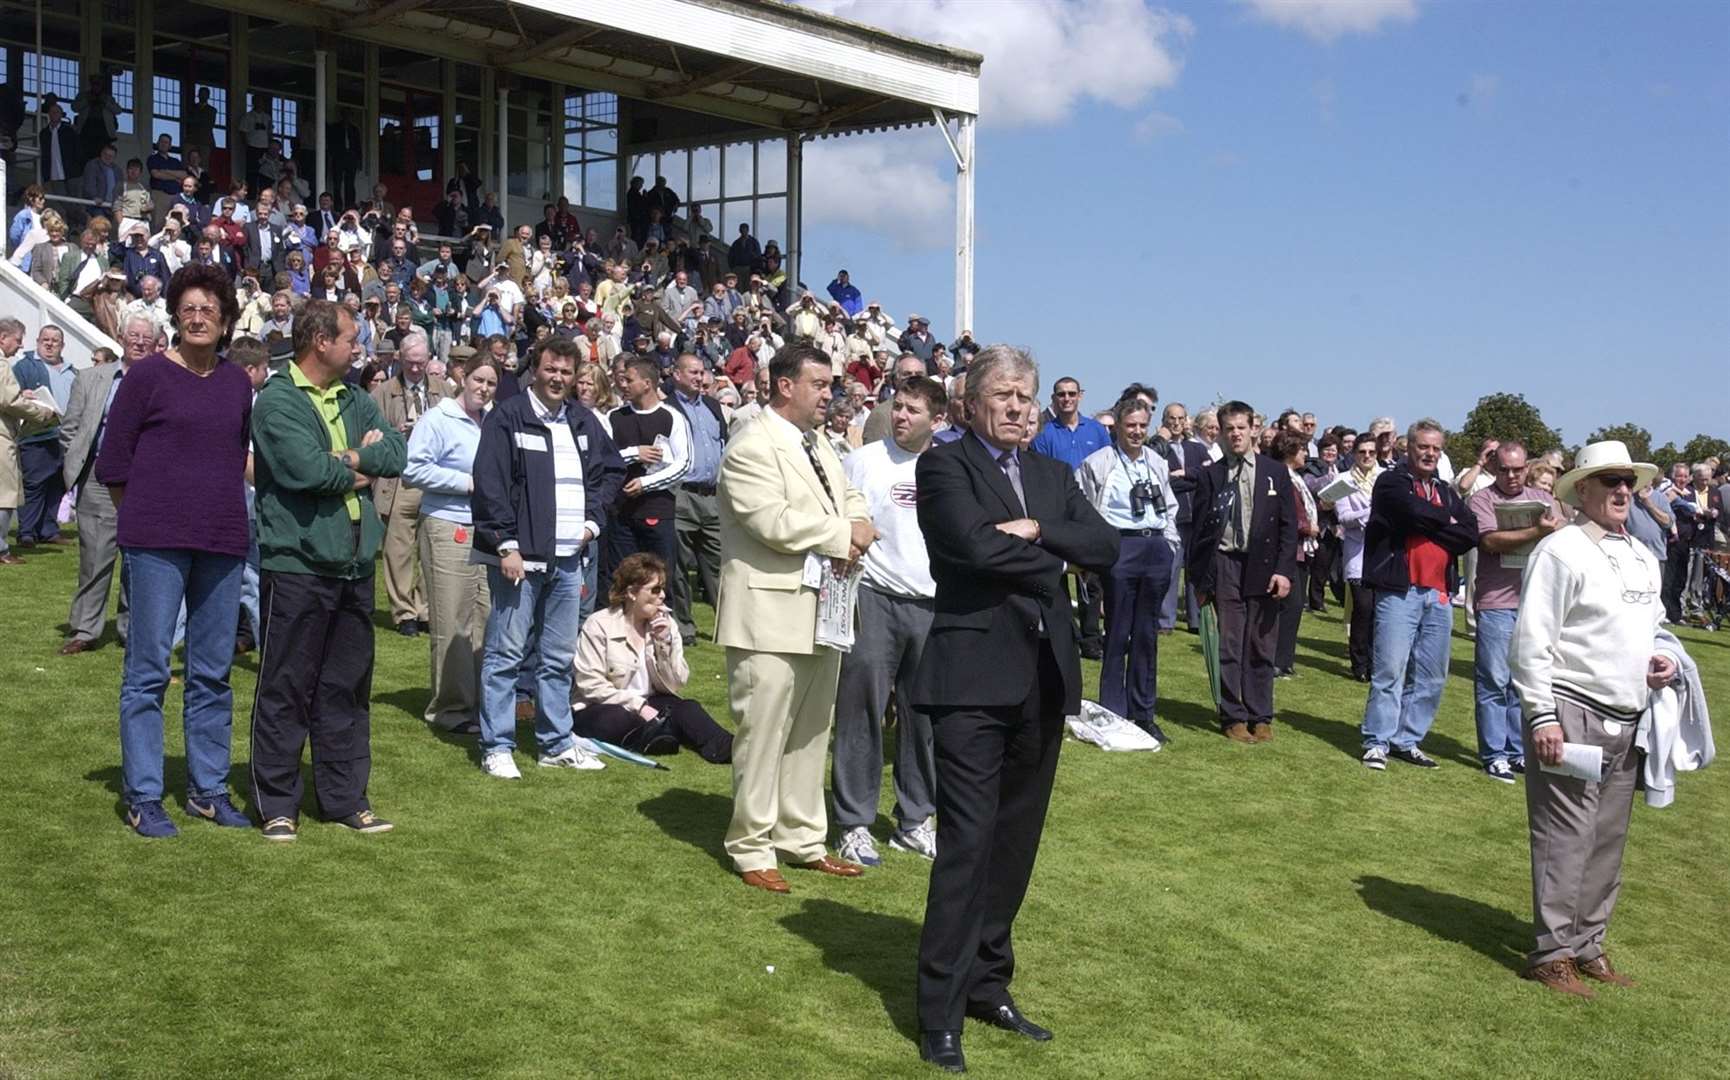 Spectators looking on in 2002